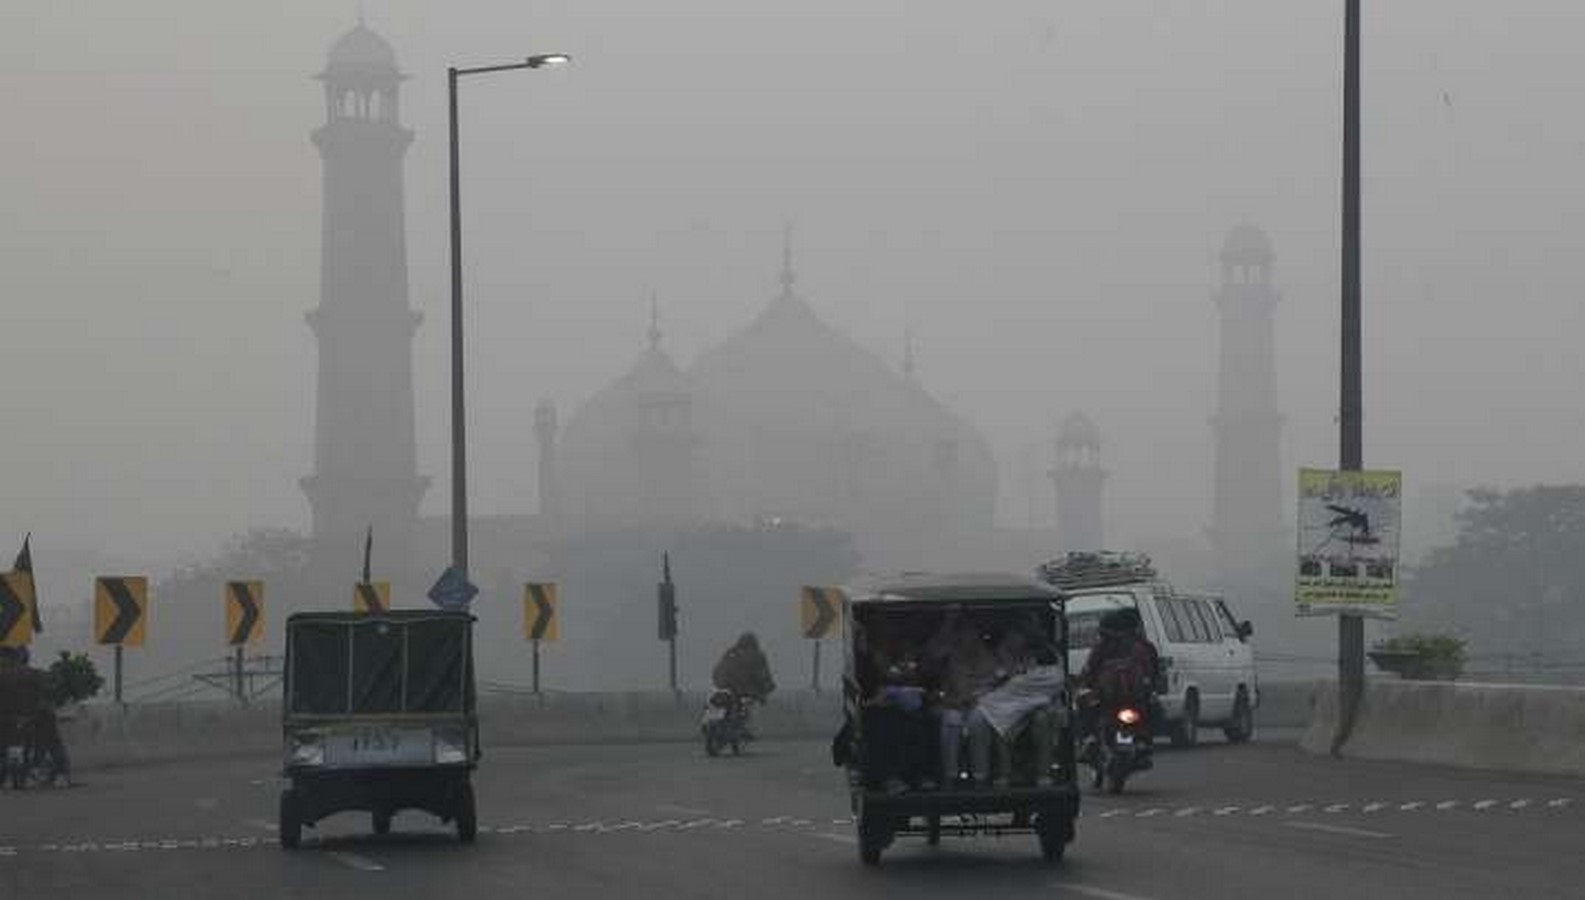 Urban pollution: Lahore, Pakistan - Sheet1